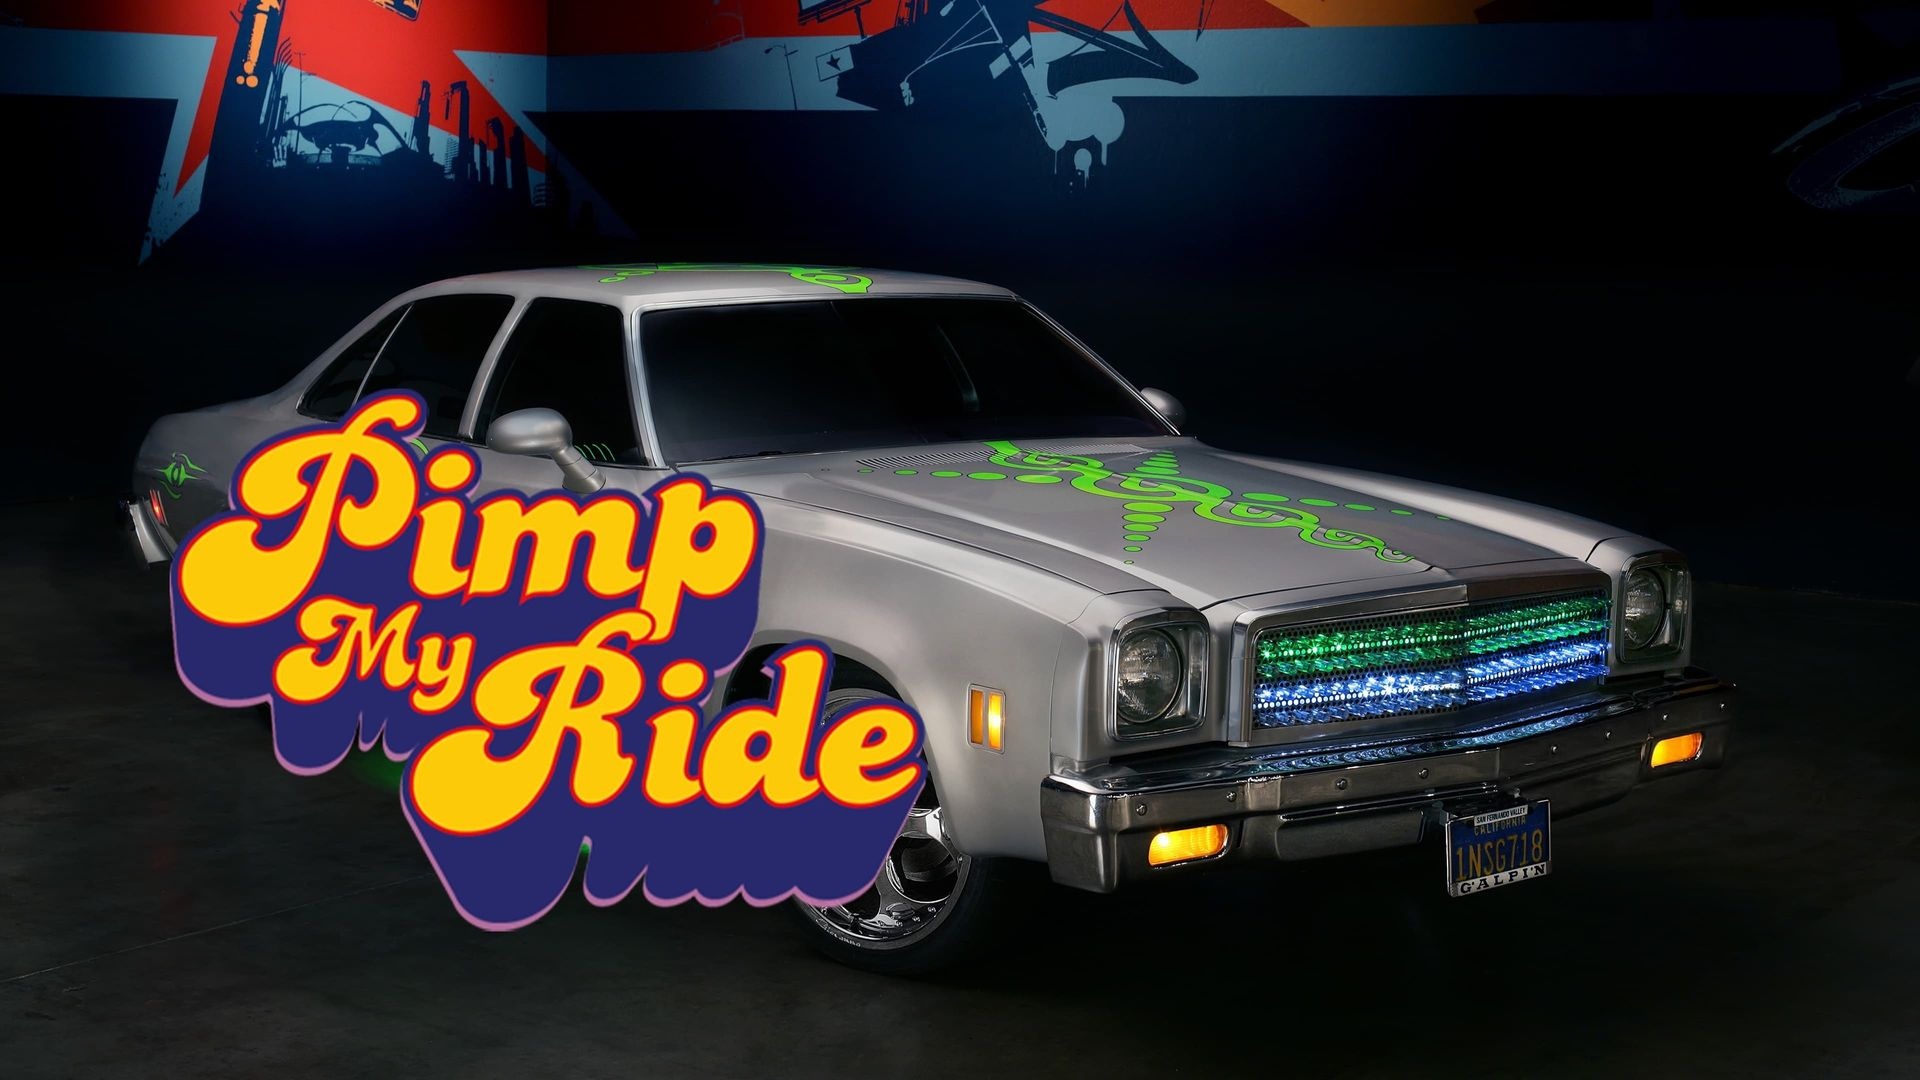 Pimp My Ride, watch episodes online, car transformation, visual extravaganza, 1920x1080 Full HD Desktop